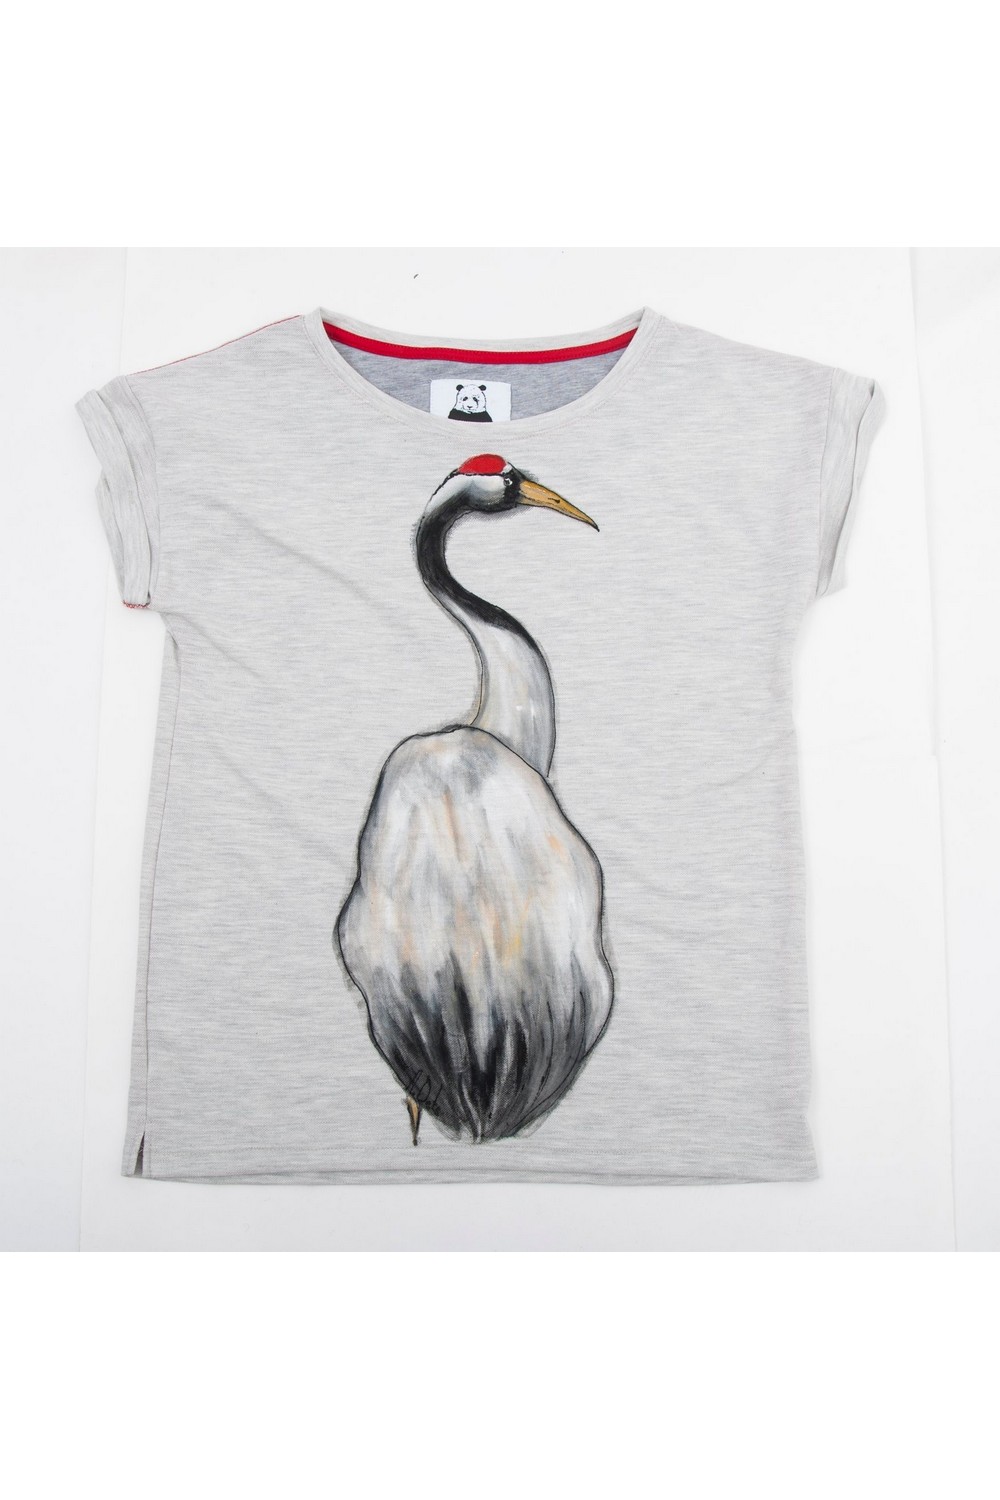 Buy Sleeveless Women`s Grey Cotton Print Yoga tee shirt , Comfortable Hippie Birds tshirt, Unique stylish t shirt